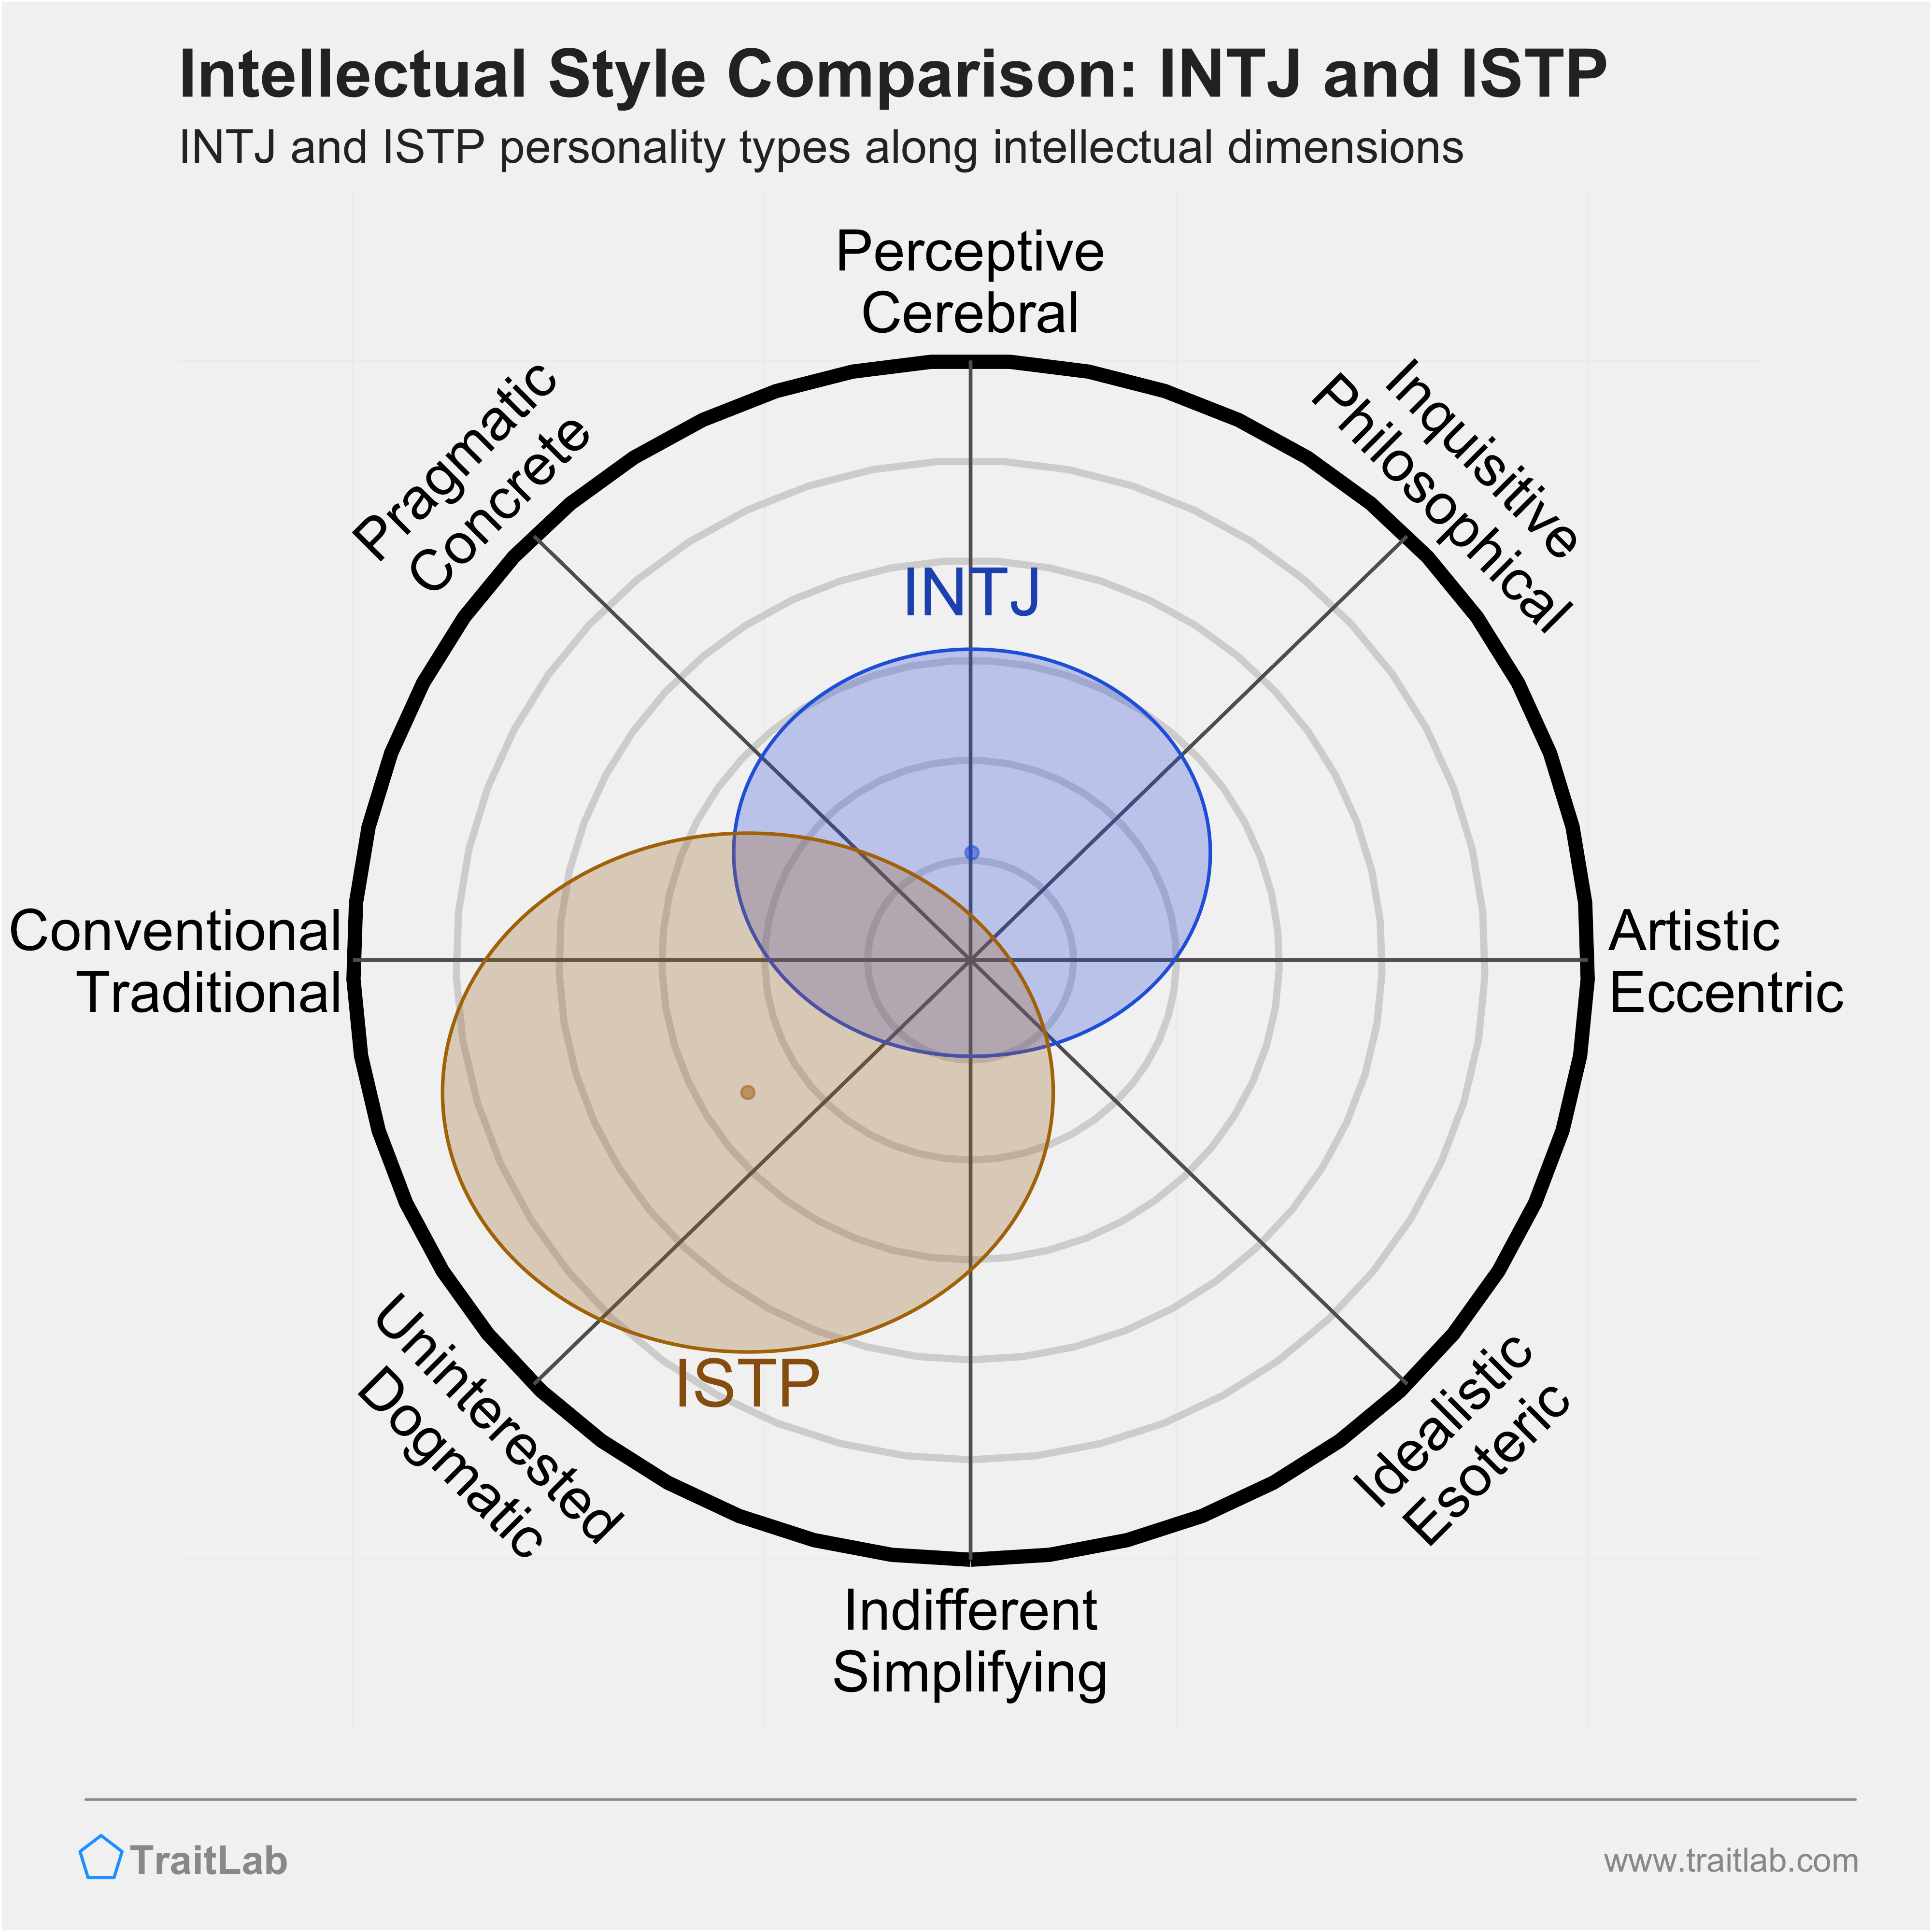 INTJ and ISTP comparison across intellectual dimensions